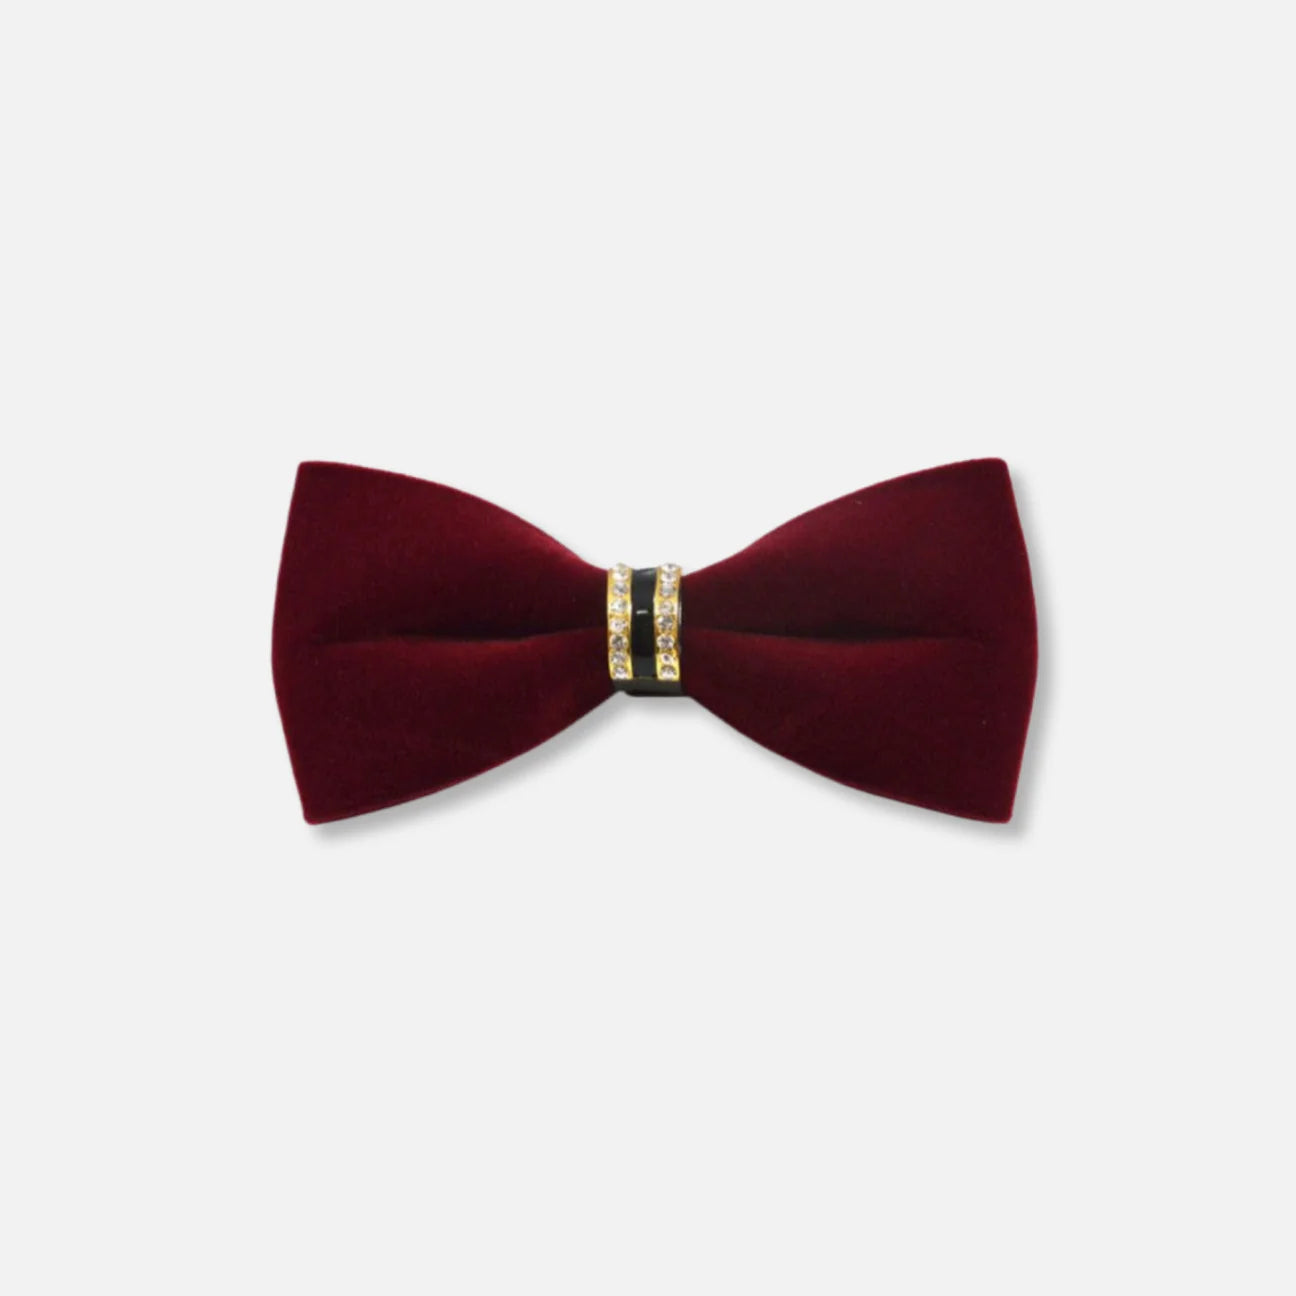 Regular velvet bow tie with Pocket Squares